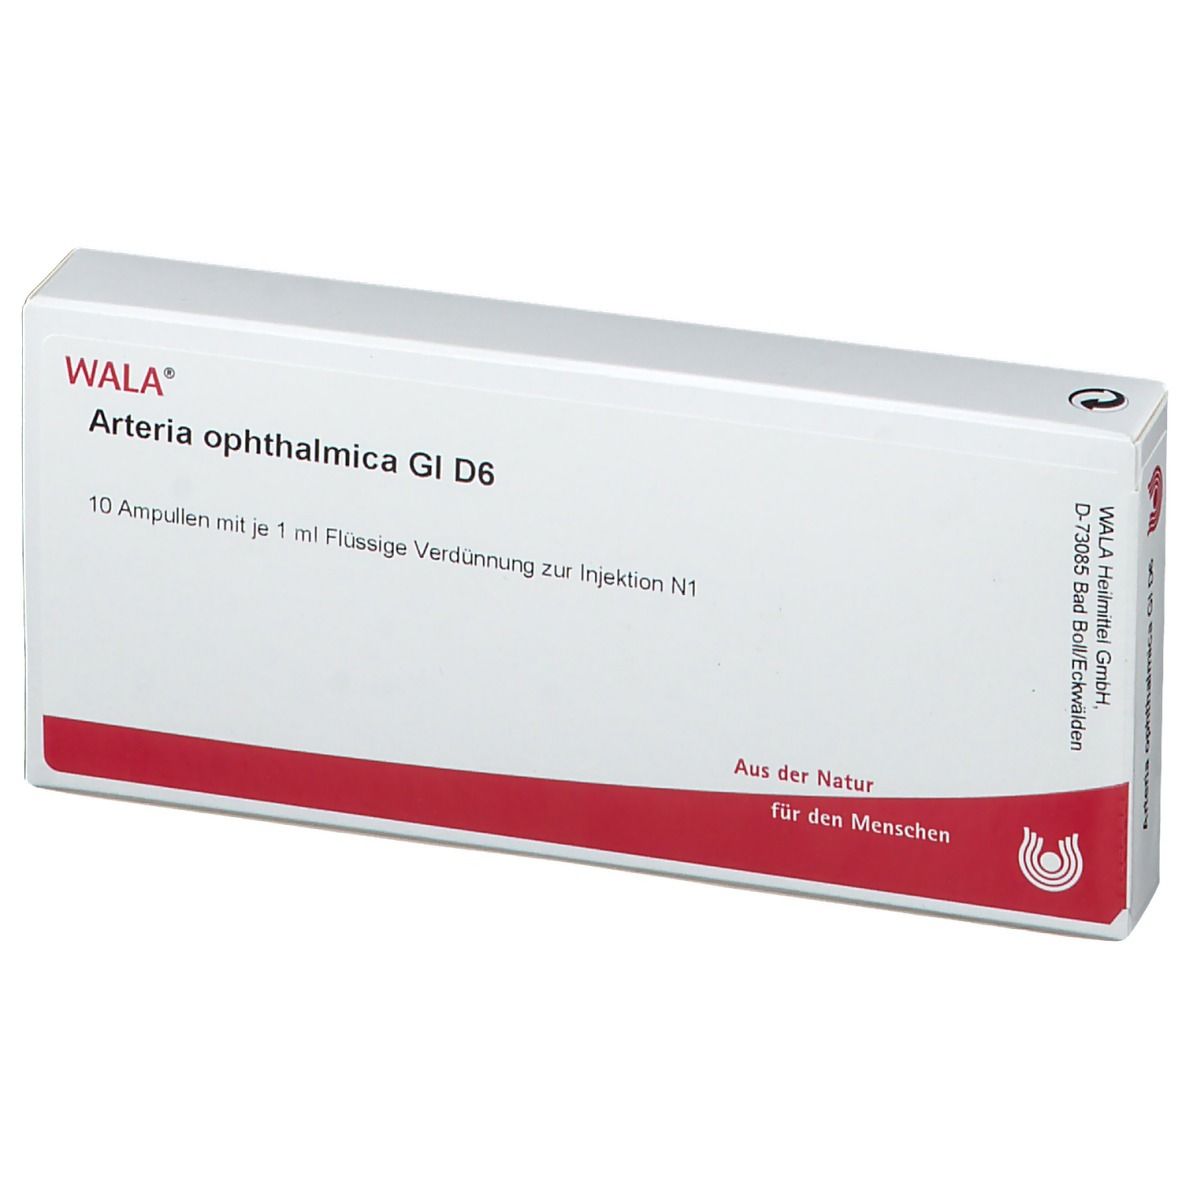 WALA® Arteria ophthalmica Gl D 6